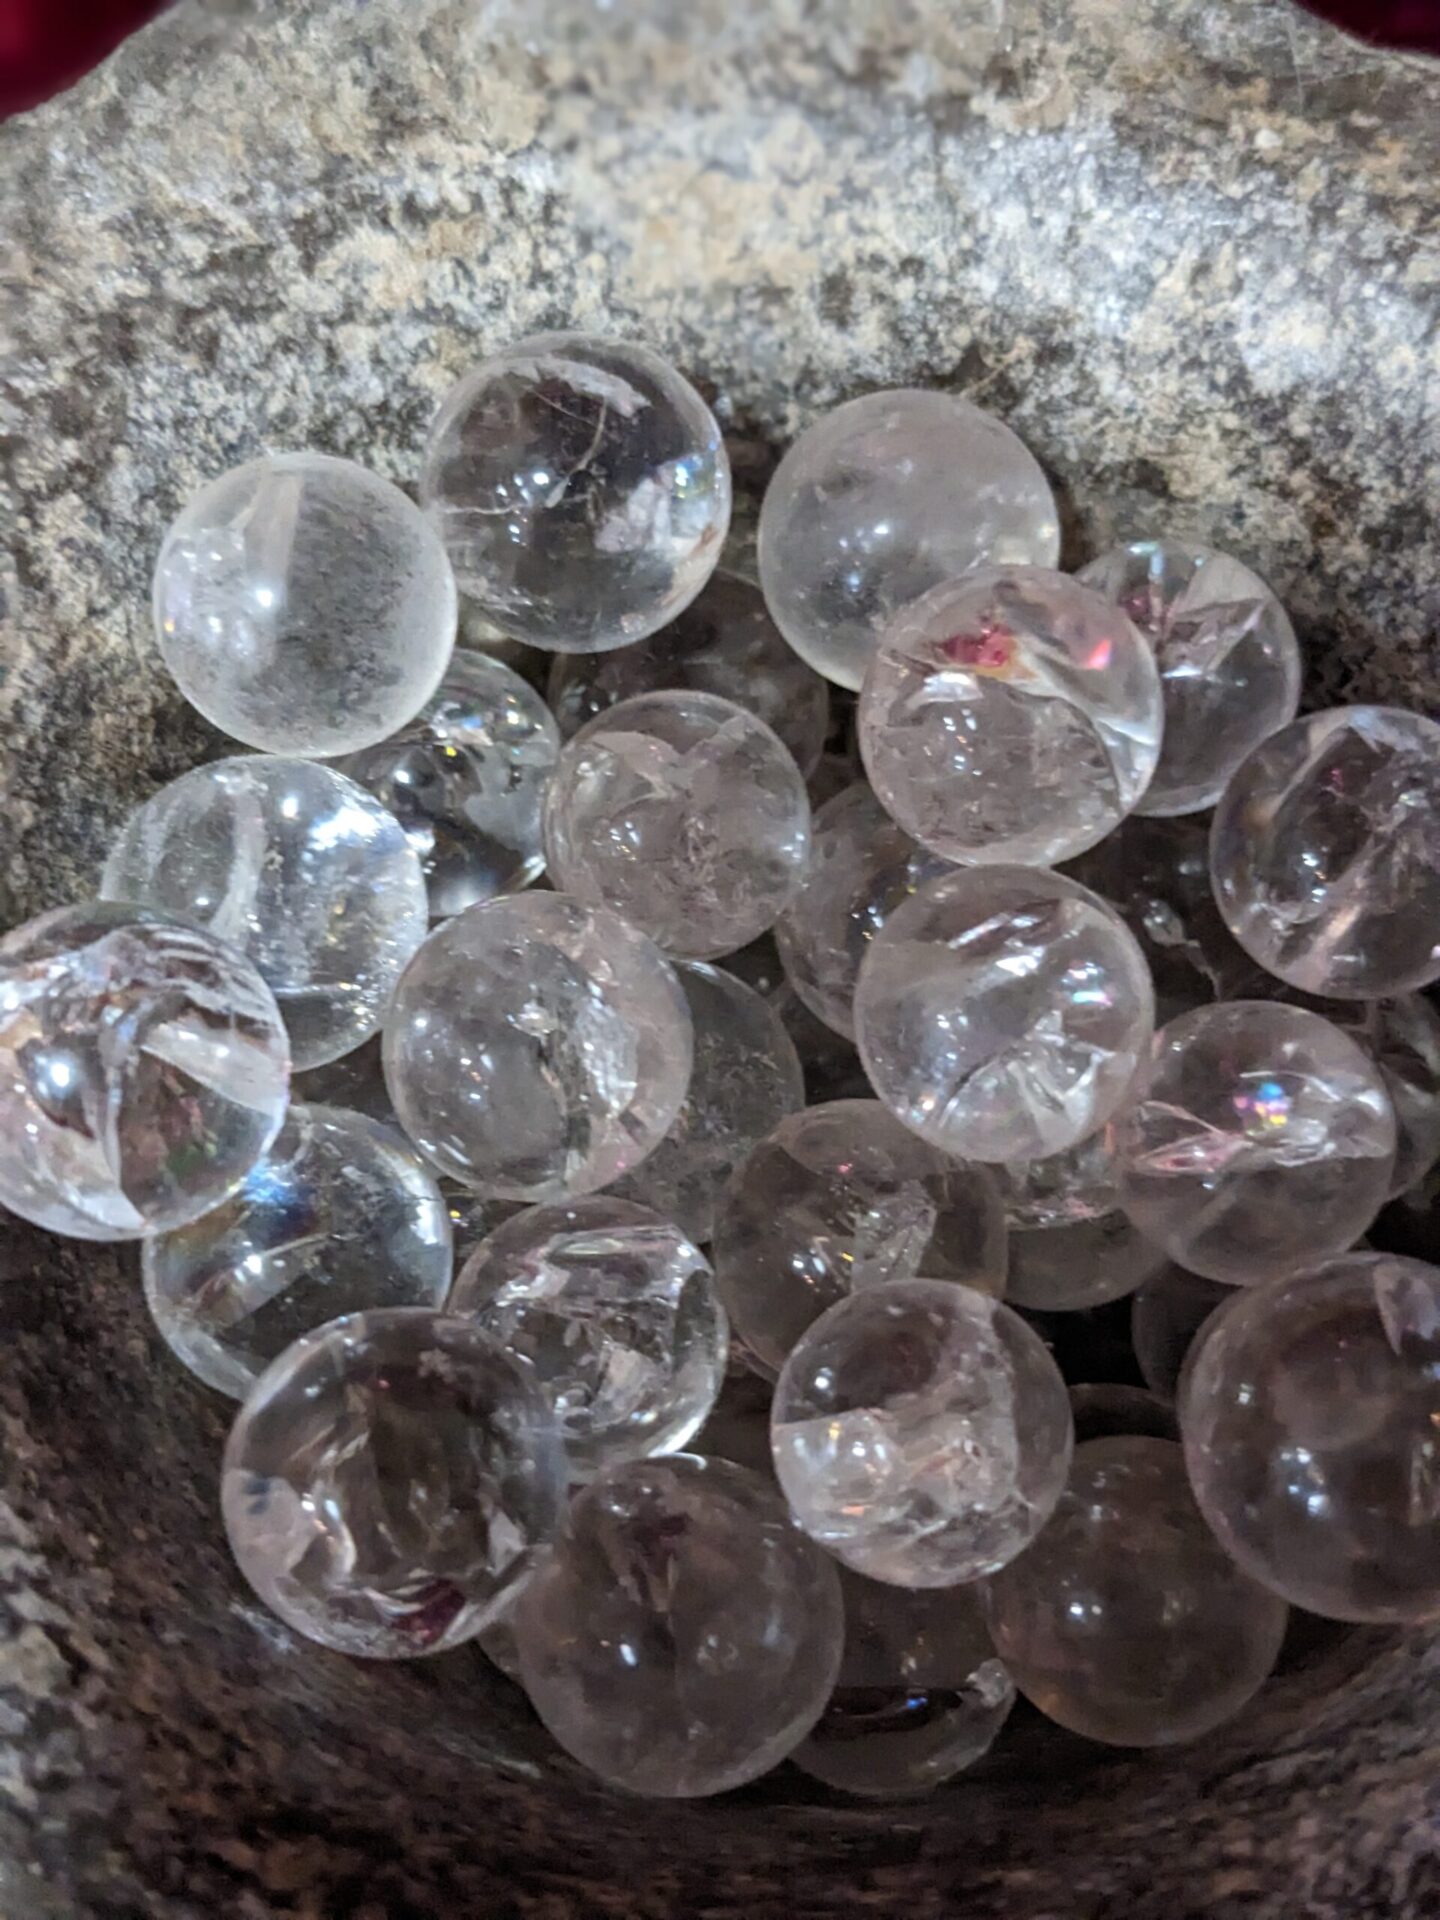 rainbow sphere crystals louisville ky 40204